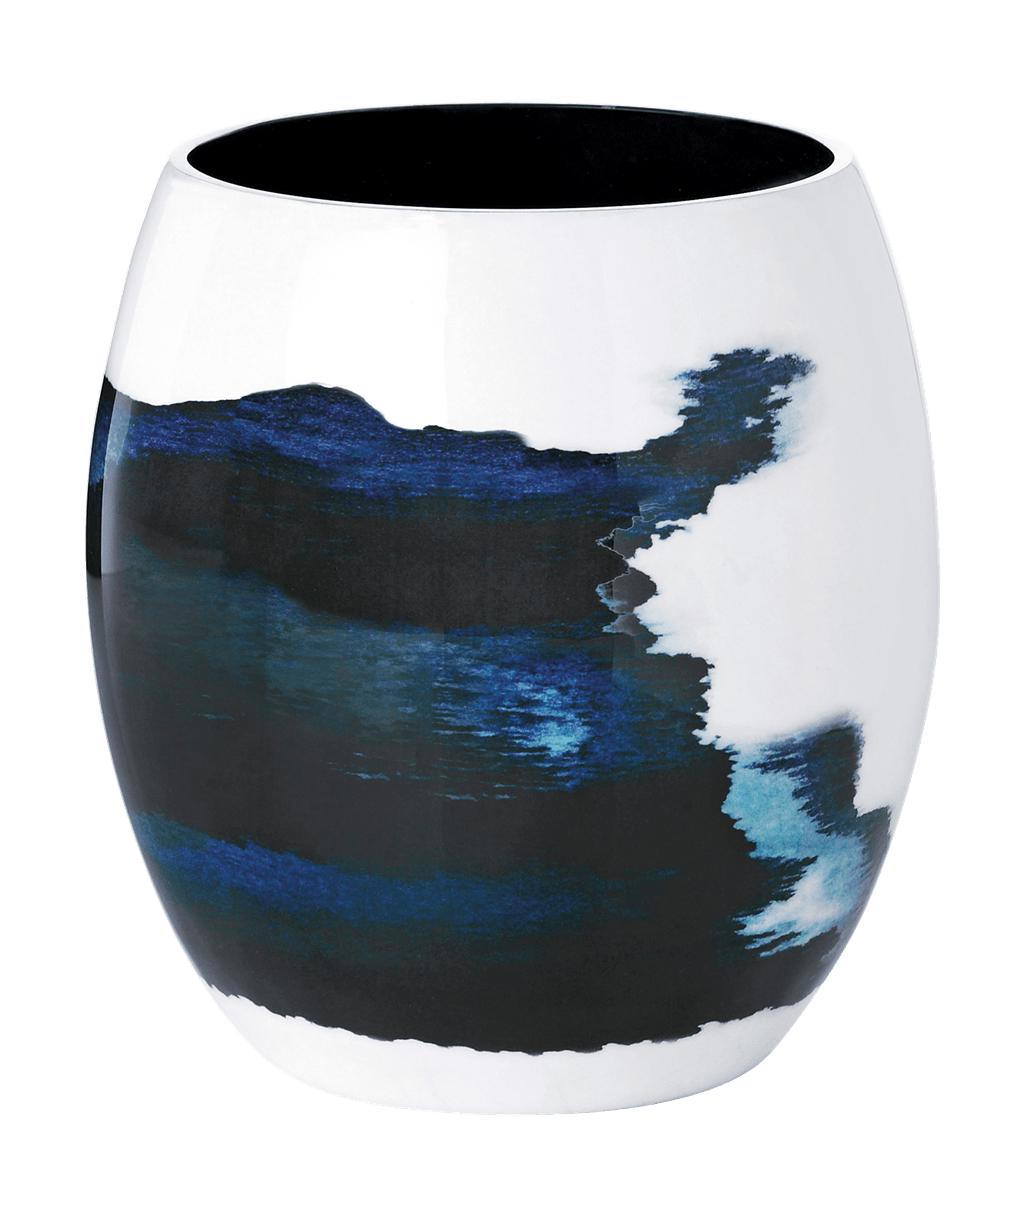 Stelton Stockholm Vase 15,7 cm, Aquatique